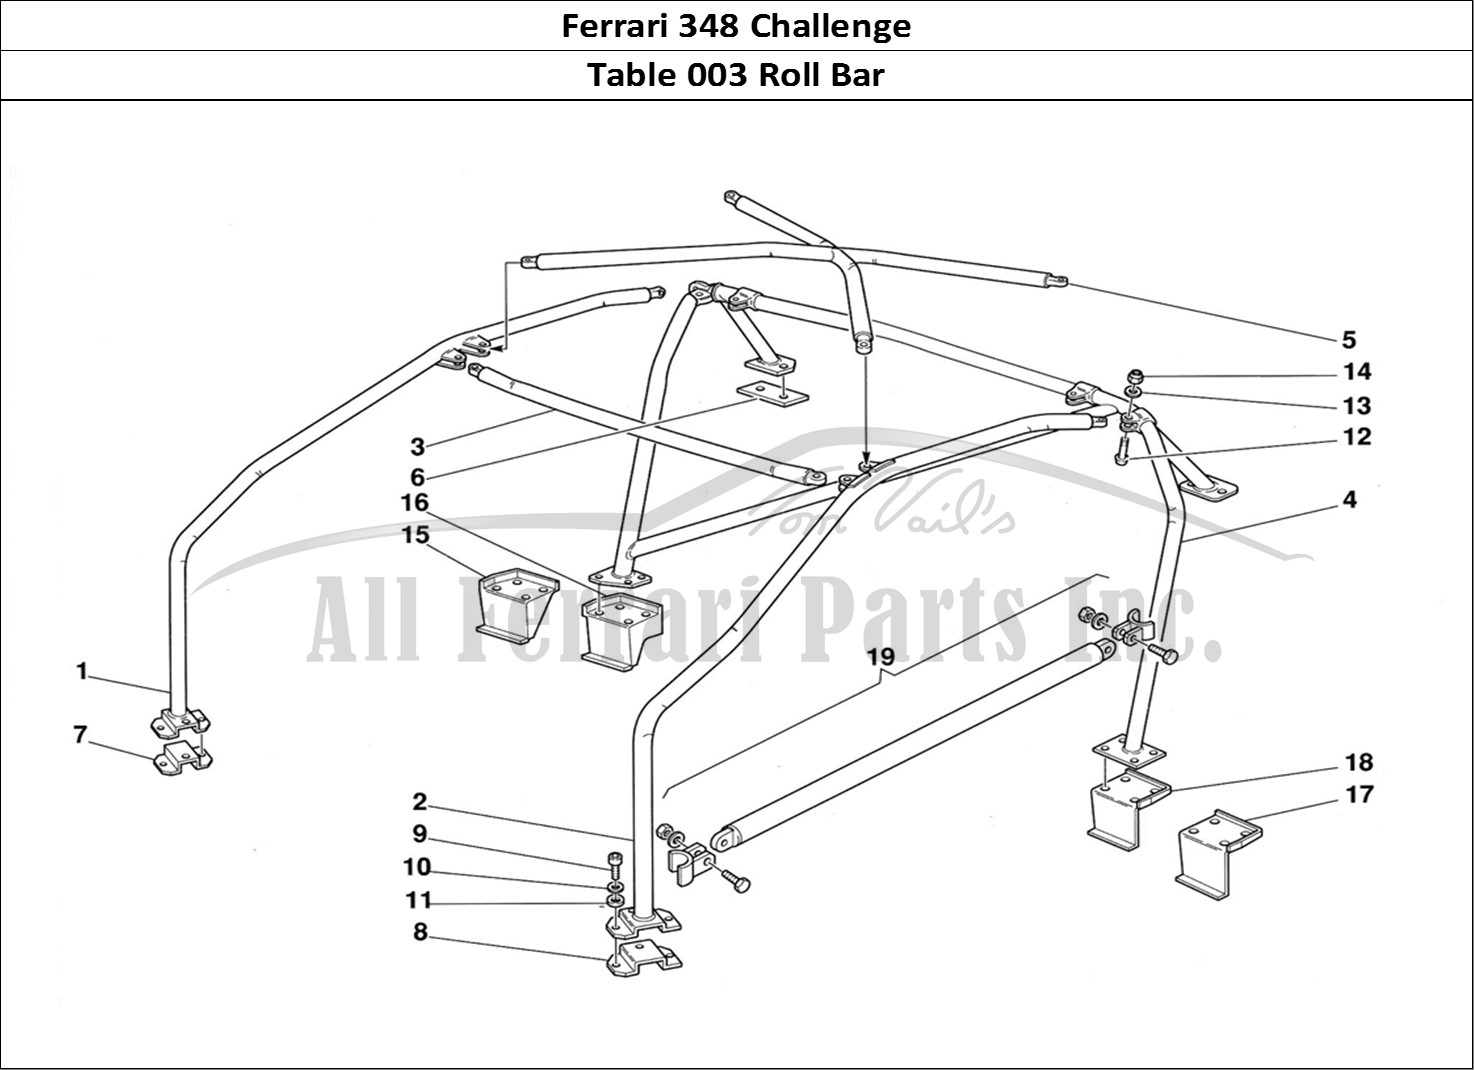 Ferrari Parts Ferrari 348 Challenge (1995) Page 003 Roll Bar